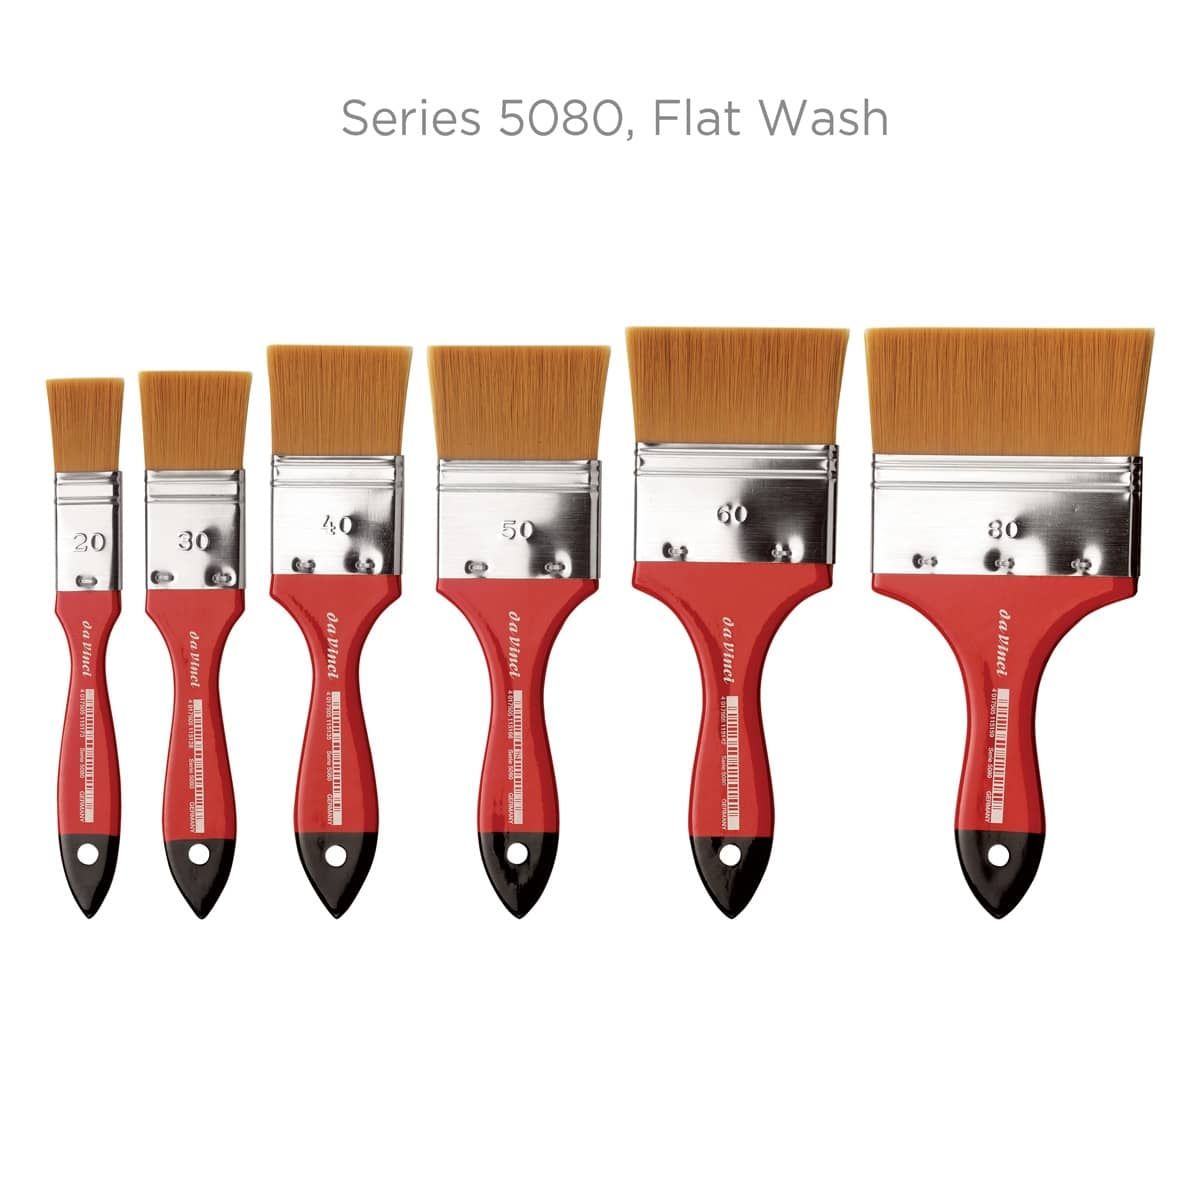 Series 5080 Flat Wash Brushes